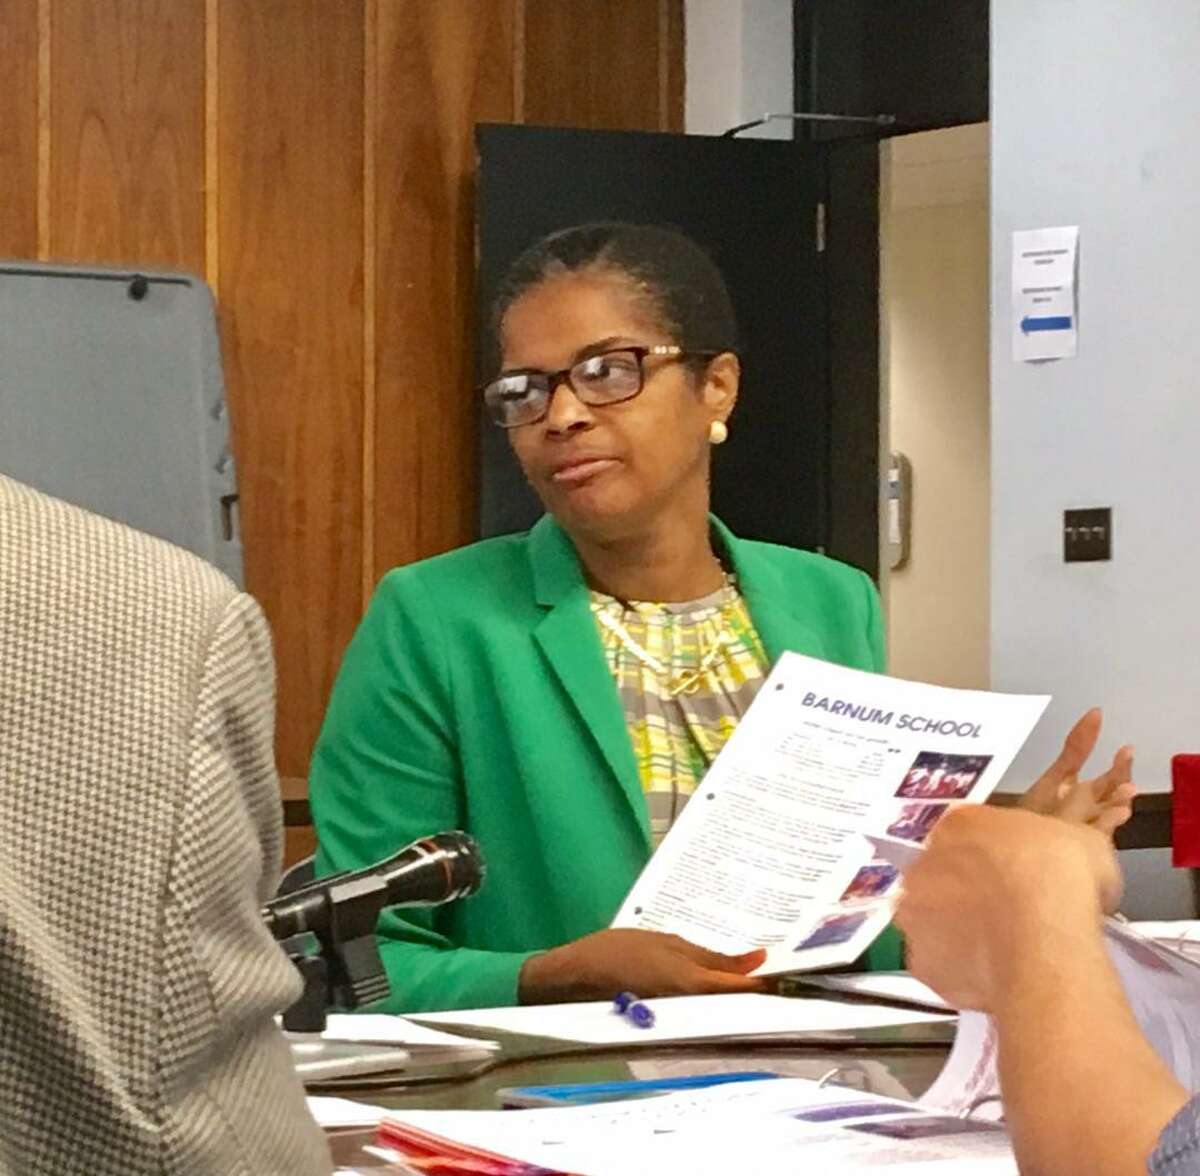 Bridgeport Schools Superintendent Aresta Johnson presenting to the board during her evaluation. June 2018.